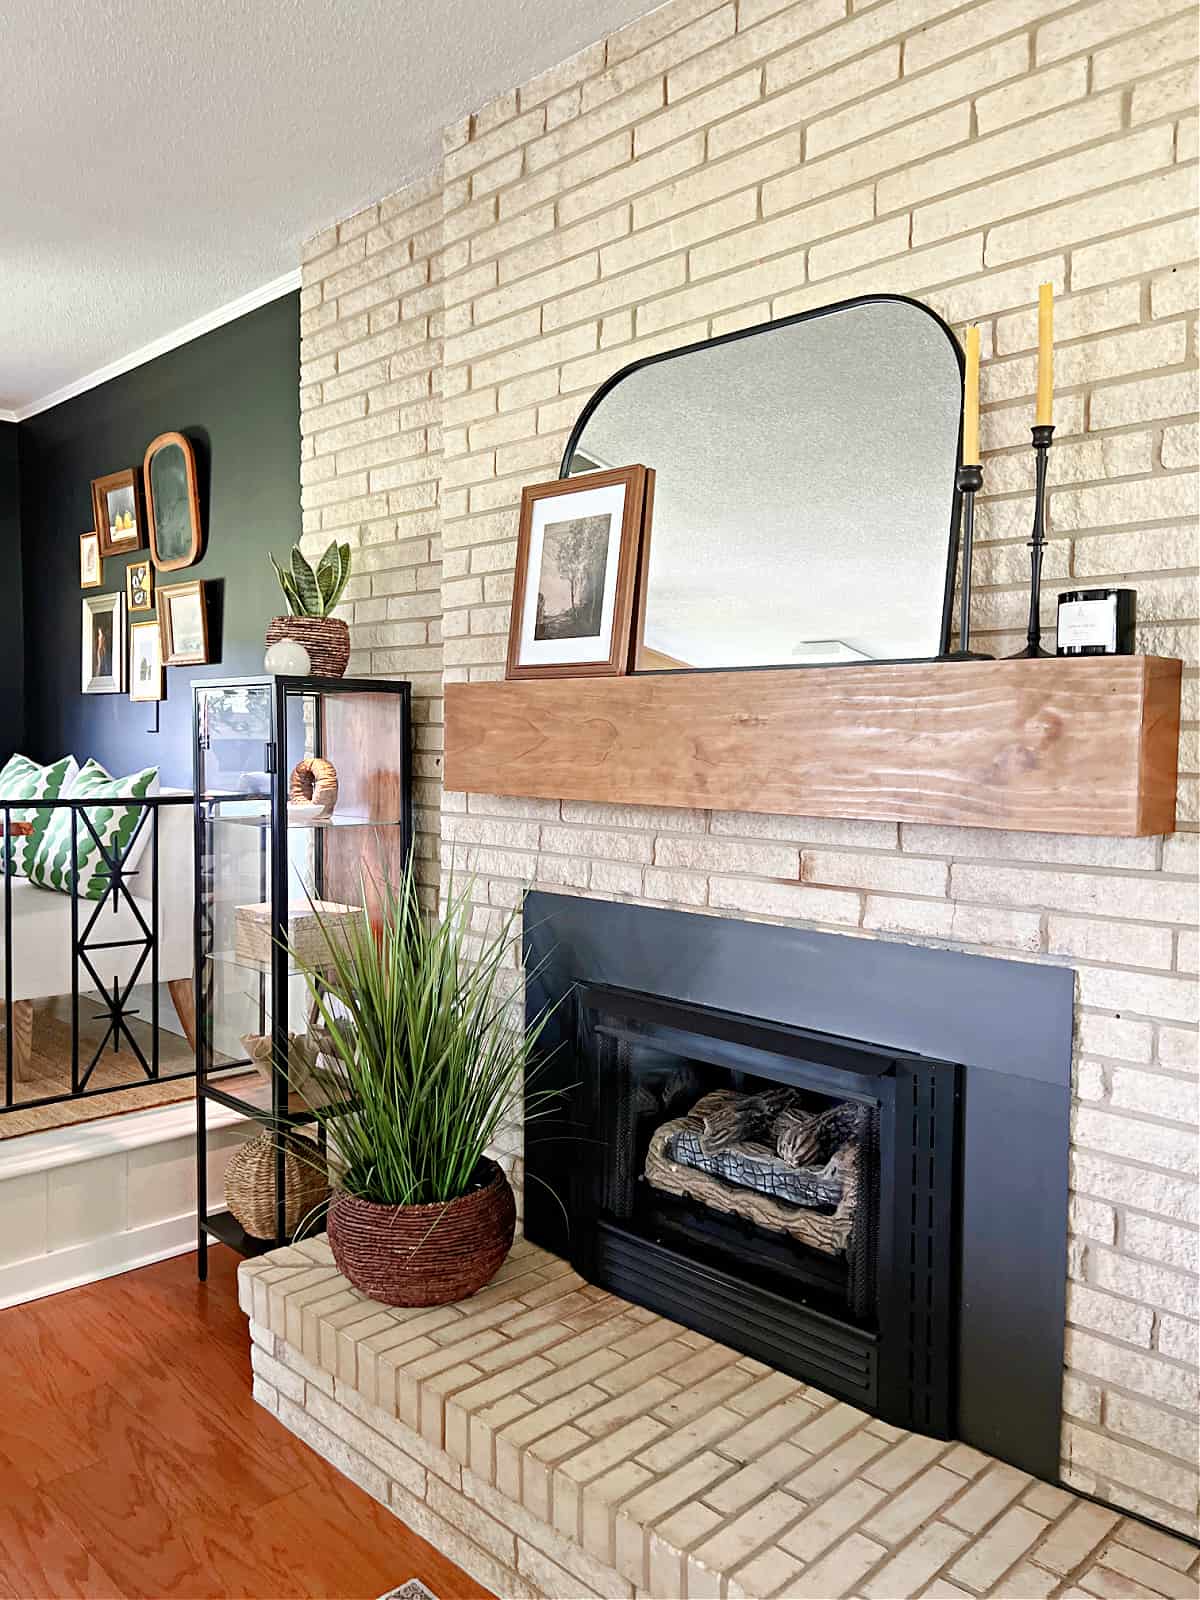 decorated DIY wood mantel shelf hanging on stone fireplace